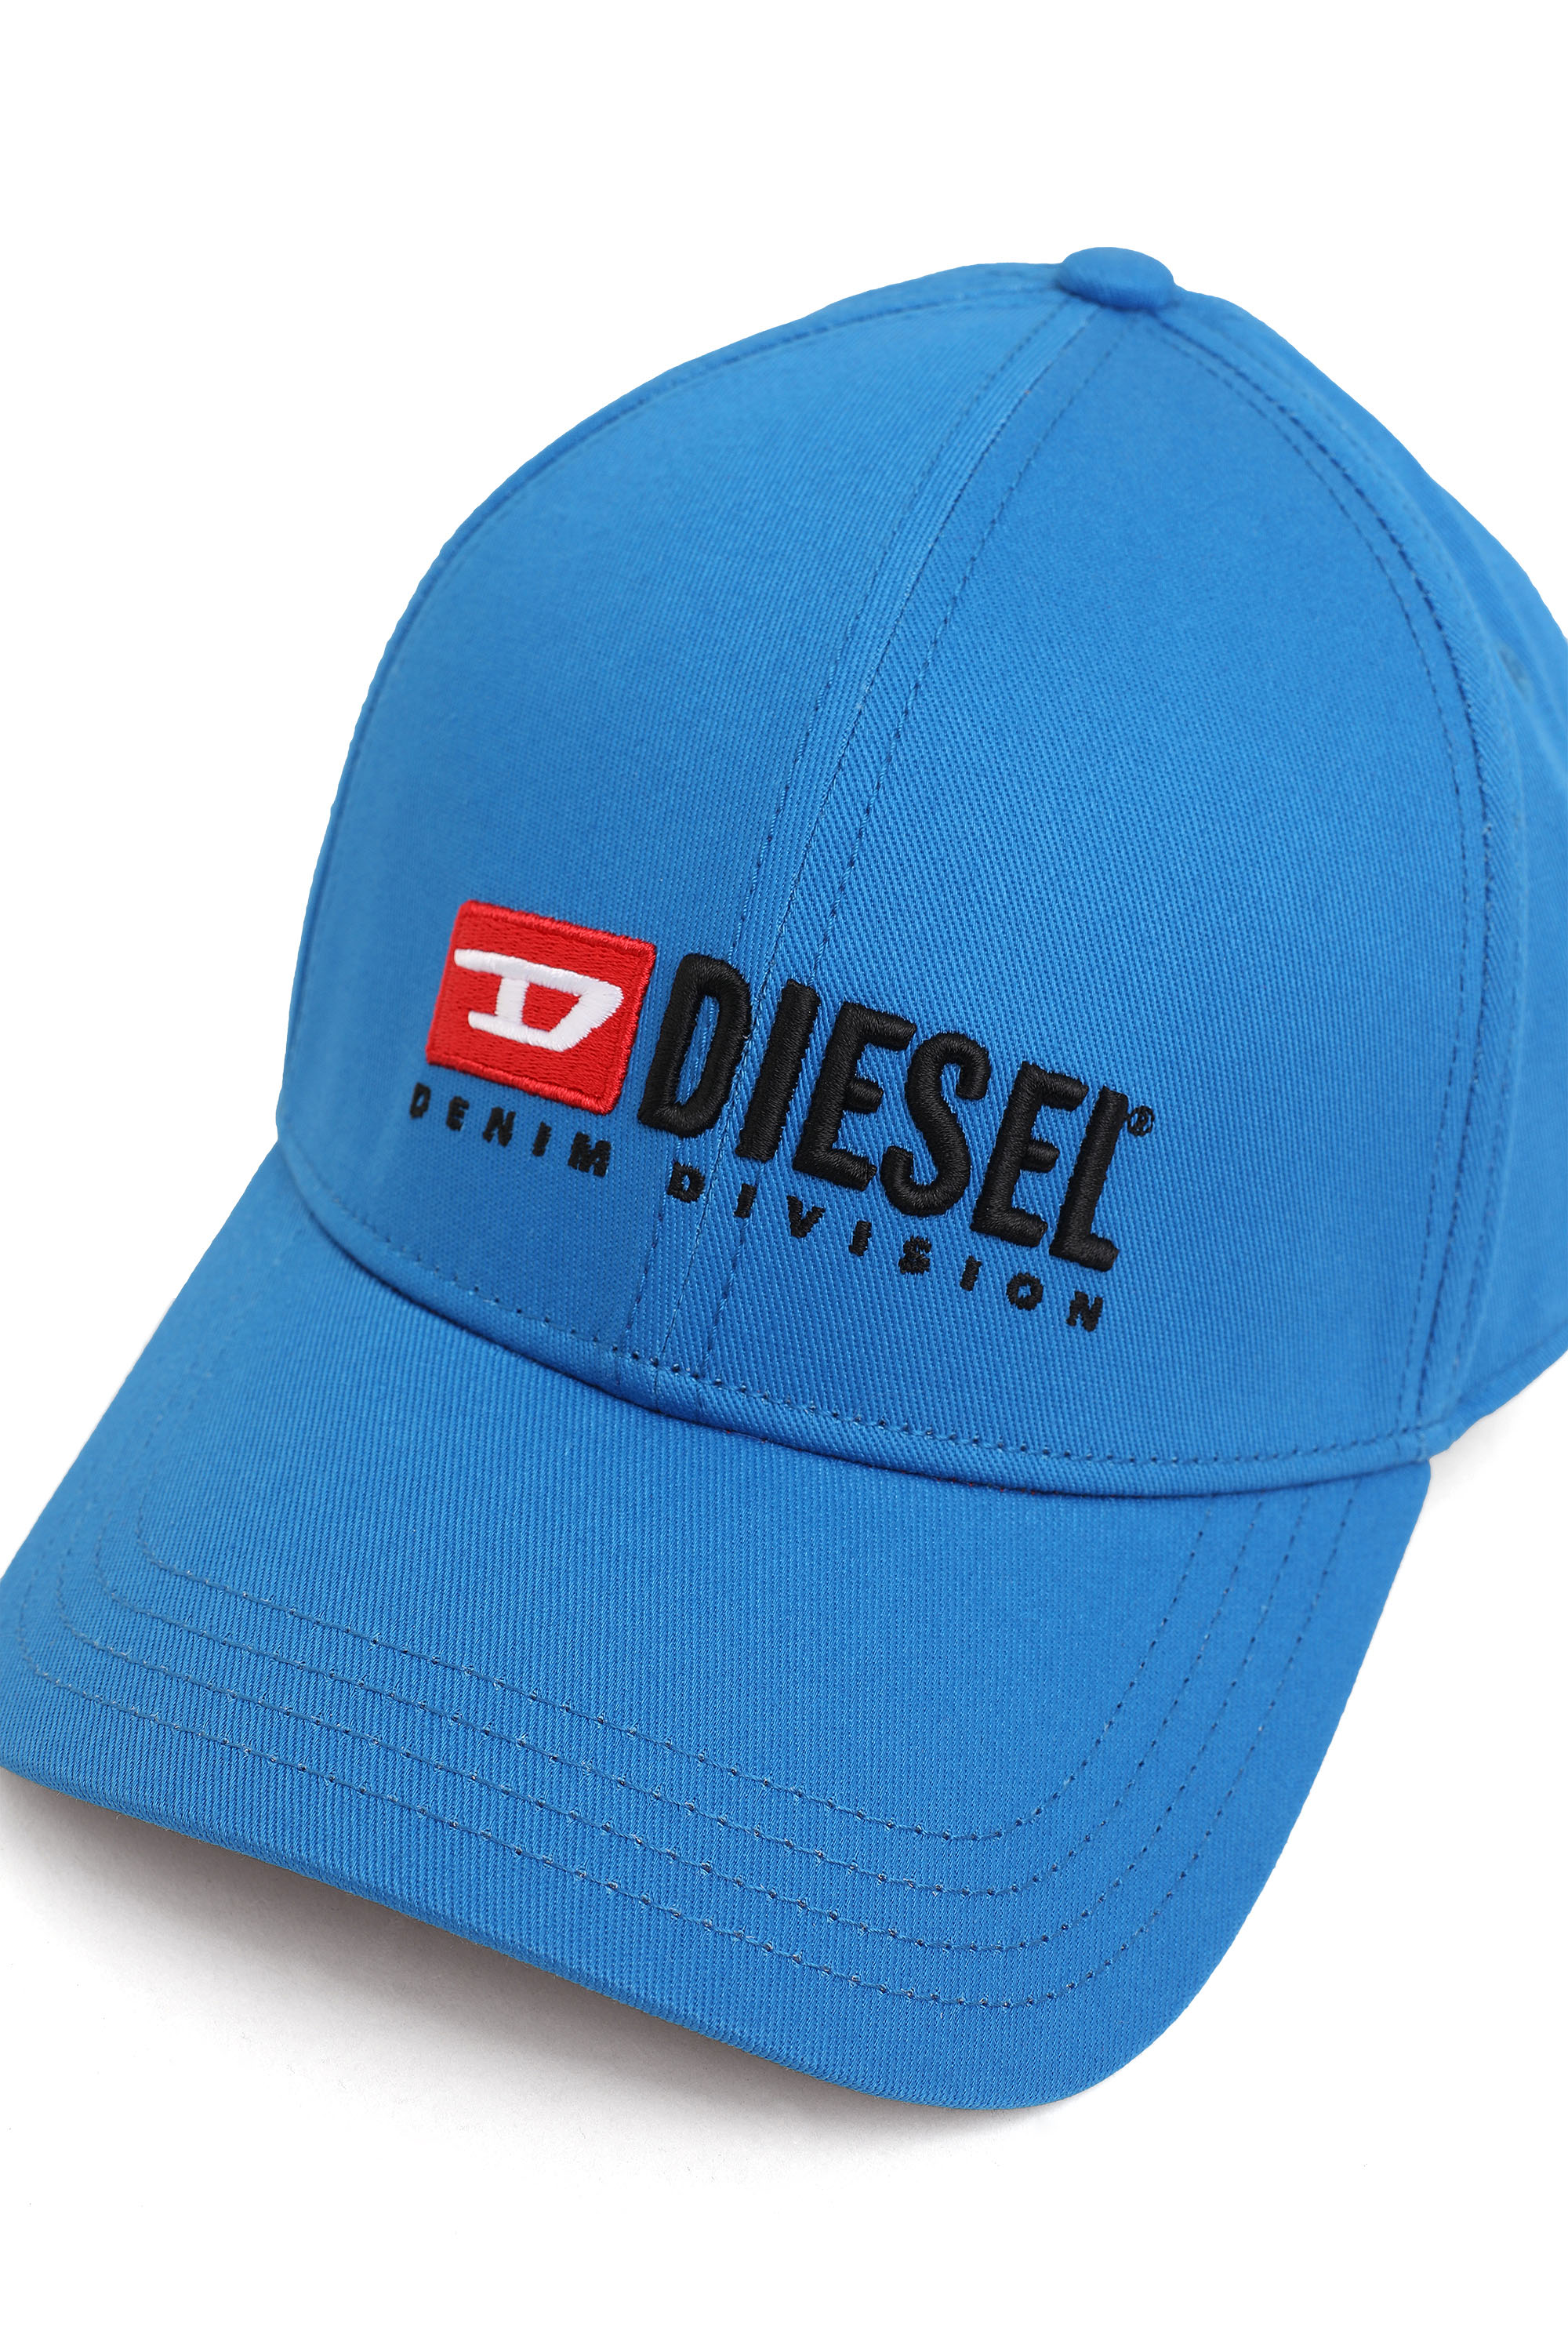 Diesel - CORRY-DIV, Bleu - Image 3